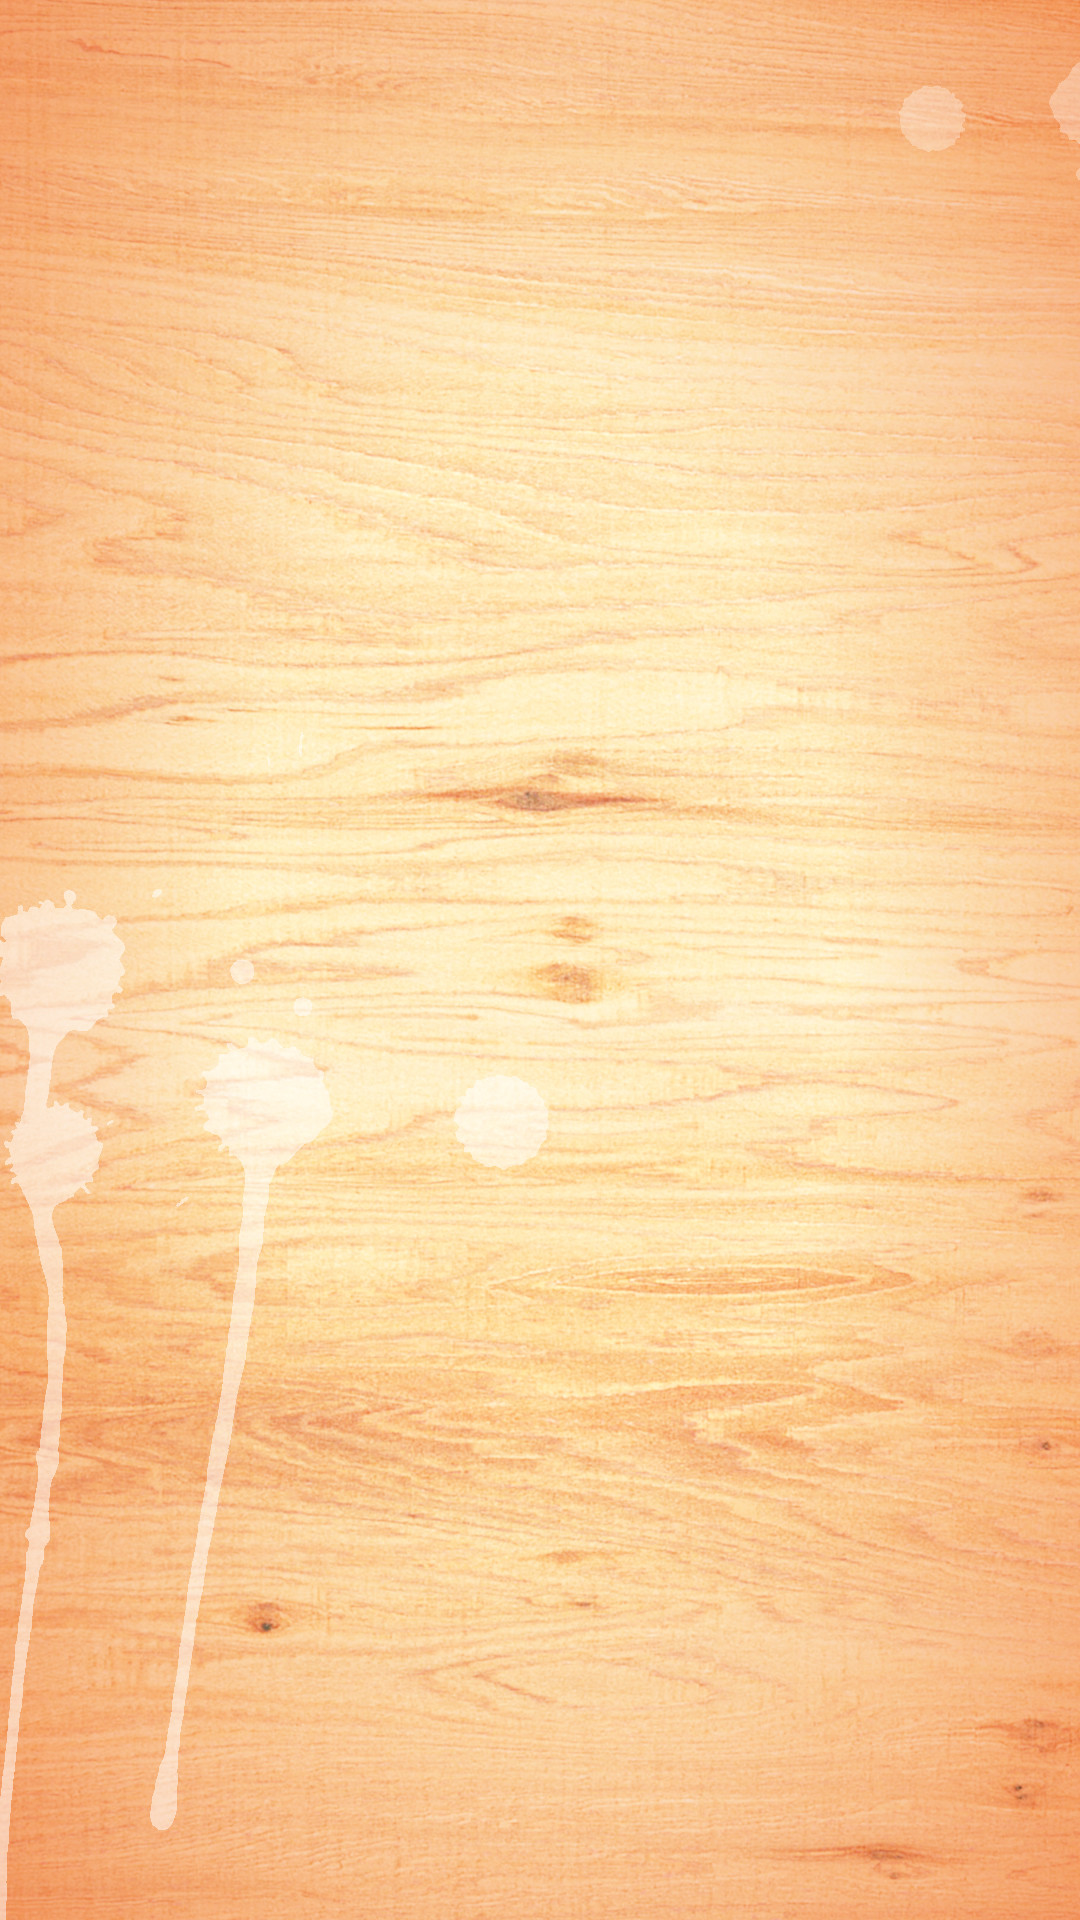 1080x1920 Wood grain gradation waterdrop orange iPhone7 Plus Wallpaper